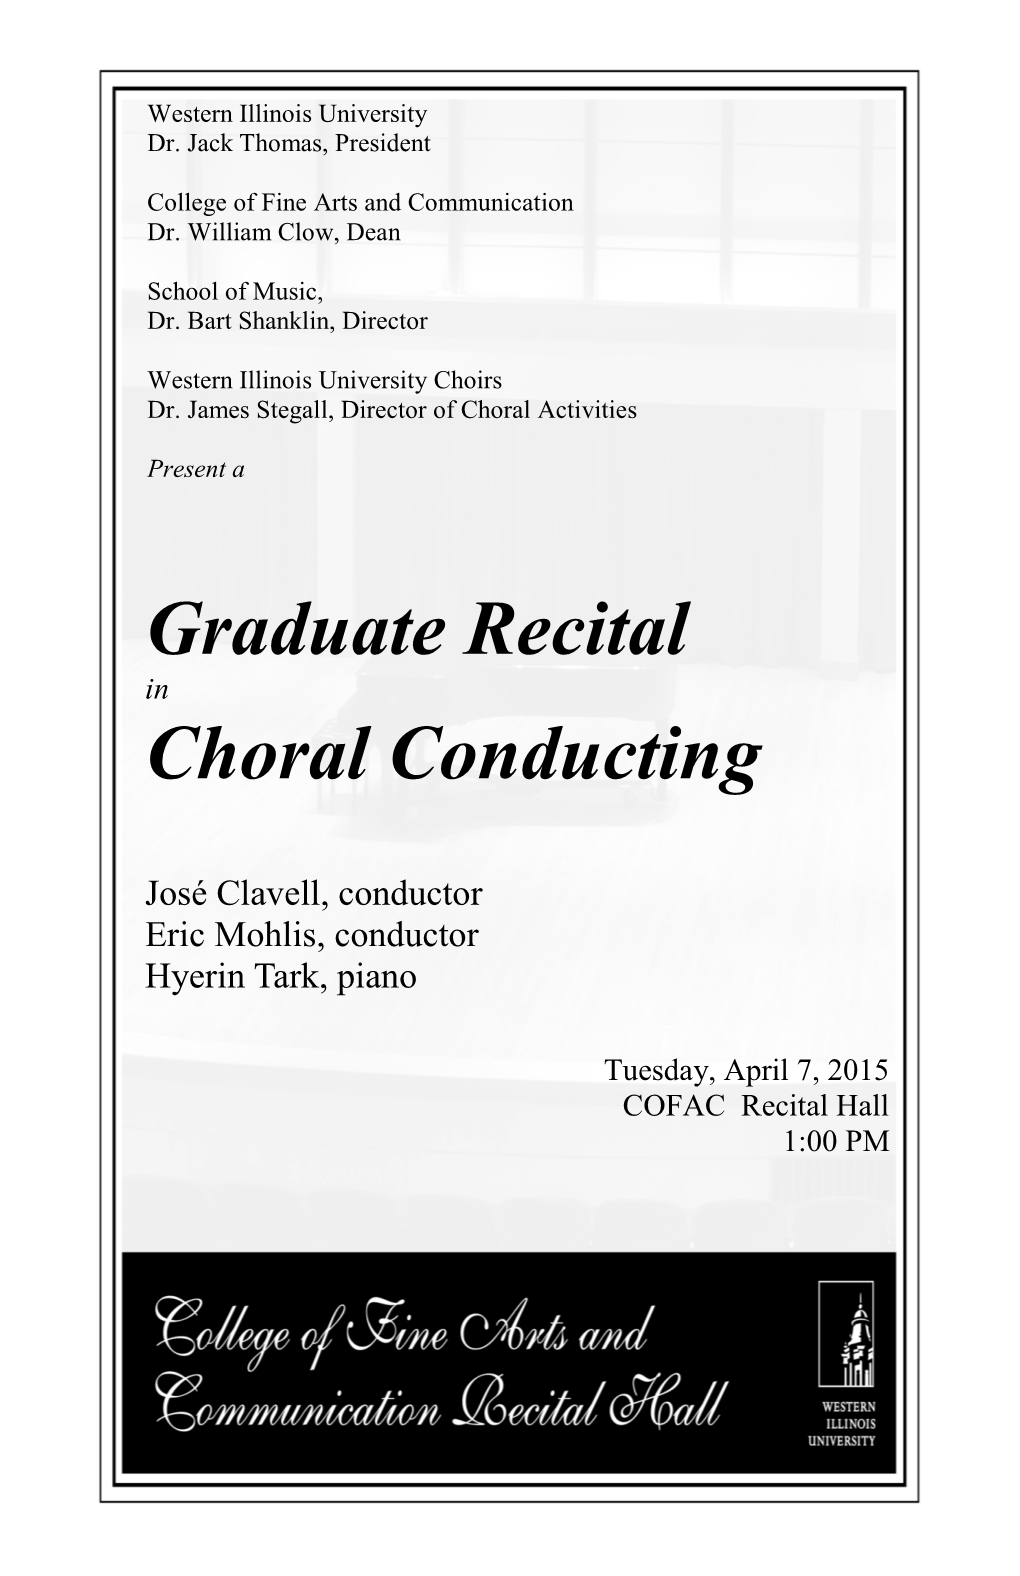 Graduate Recital Choral Conducting